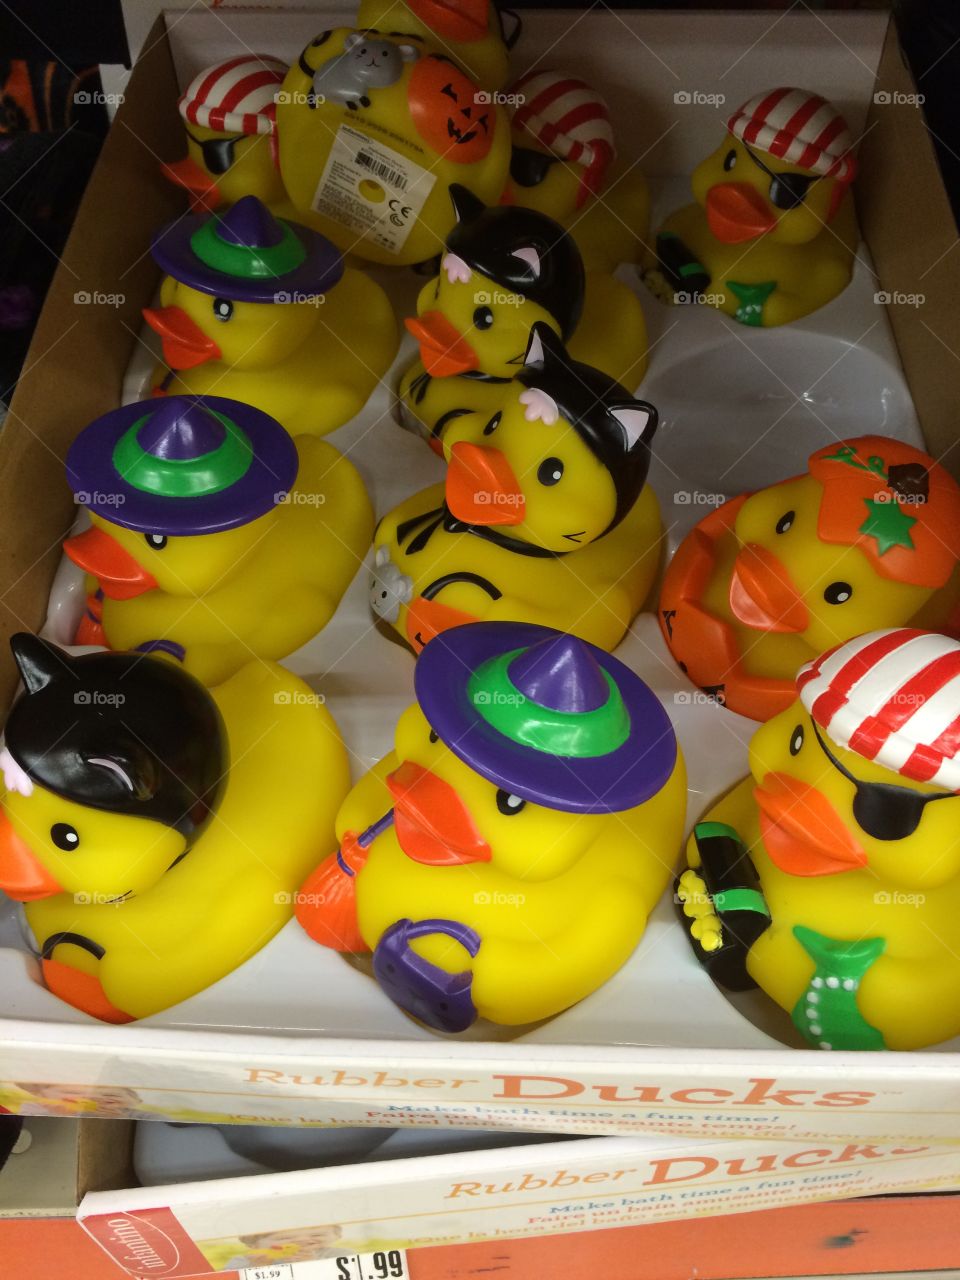 Halloween Duckies. A set of rubber duckies ready for Halloween